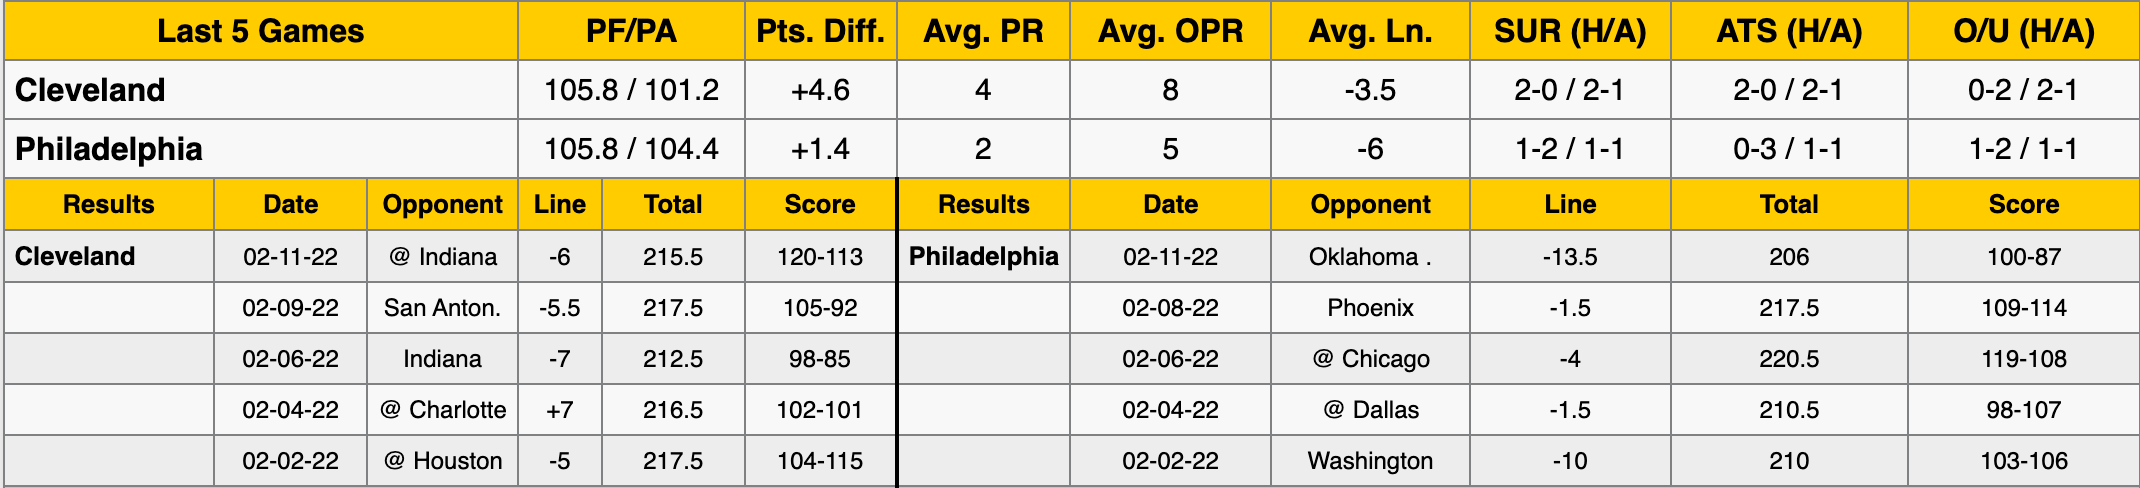 Philadelphia 76ers vs Cleveland Cavaliers Data